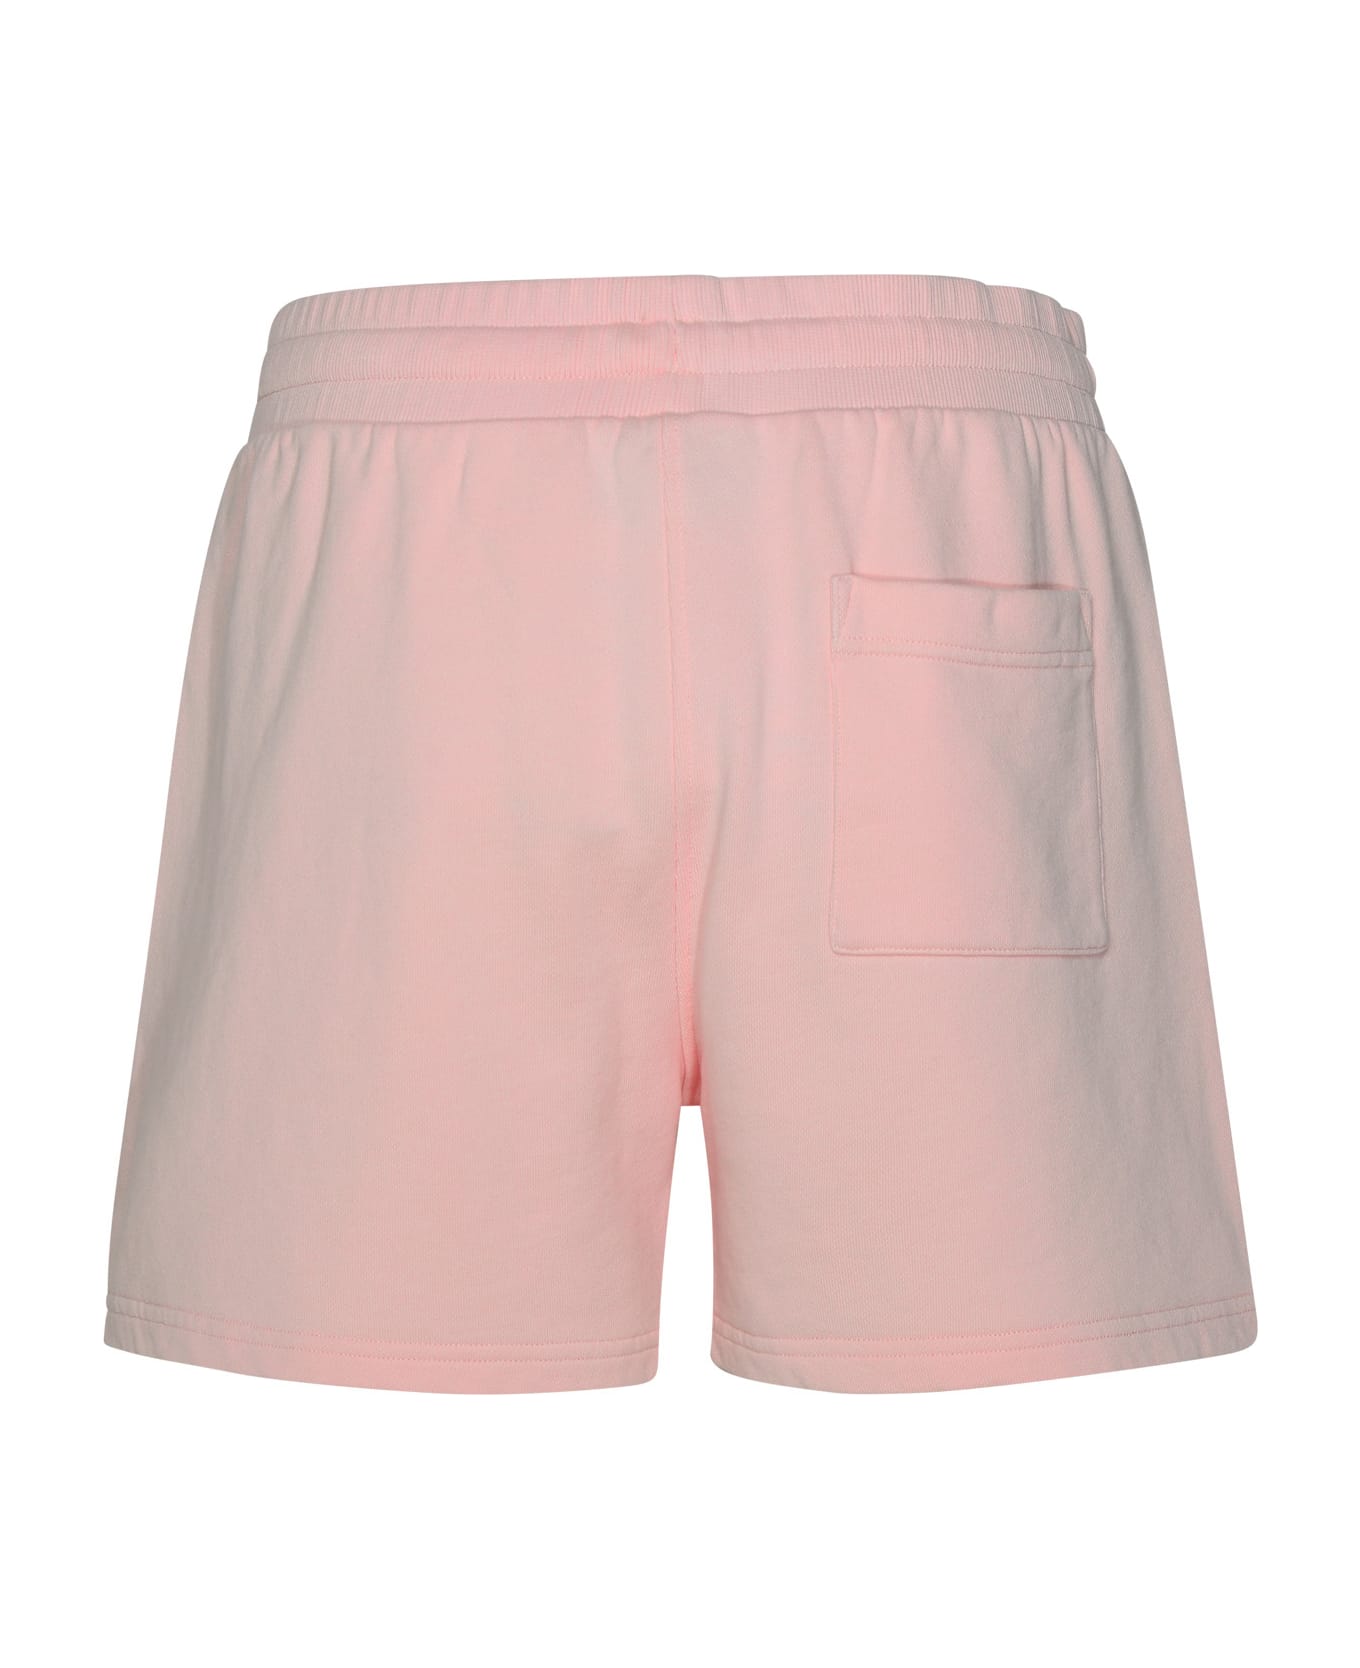 Casablanca 'equipement Sportif' Pink Organic Cotton Shorts - PINK LOOPBACK